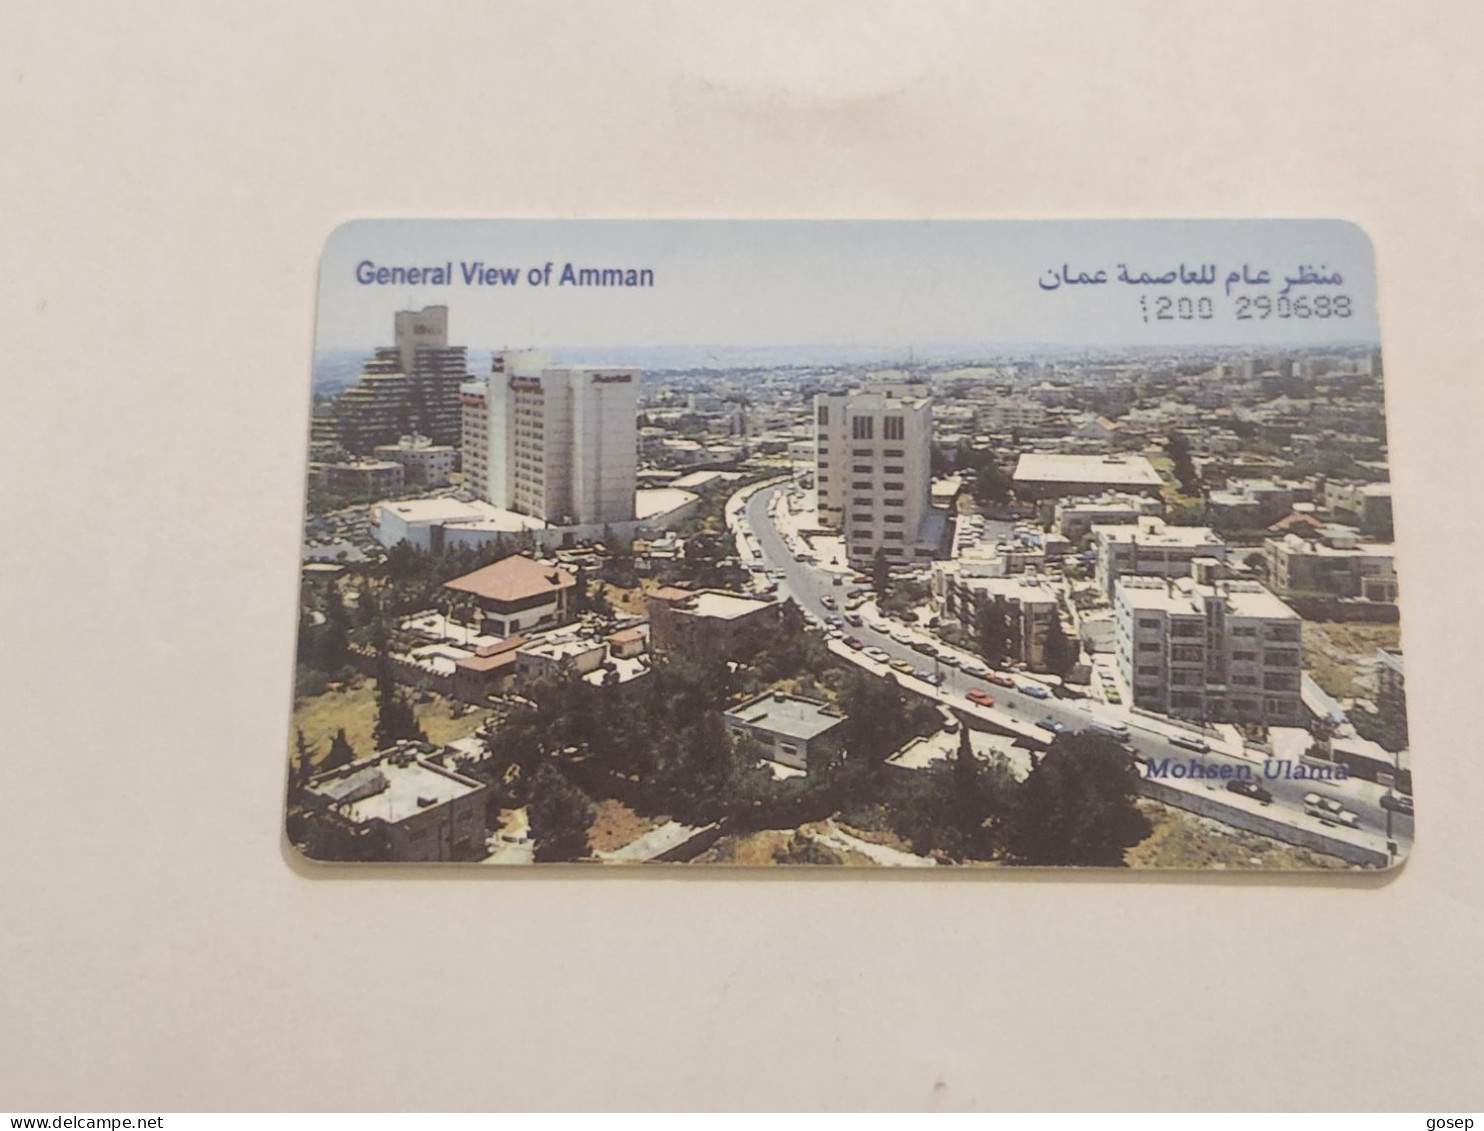 JORDAN-(JO-ALO-0028)-King Abdullah Mosque-(128)-(1200-290688)-(15JD)-(9/2000)-used Card+1card Prepiad Free - Jordanien